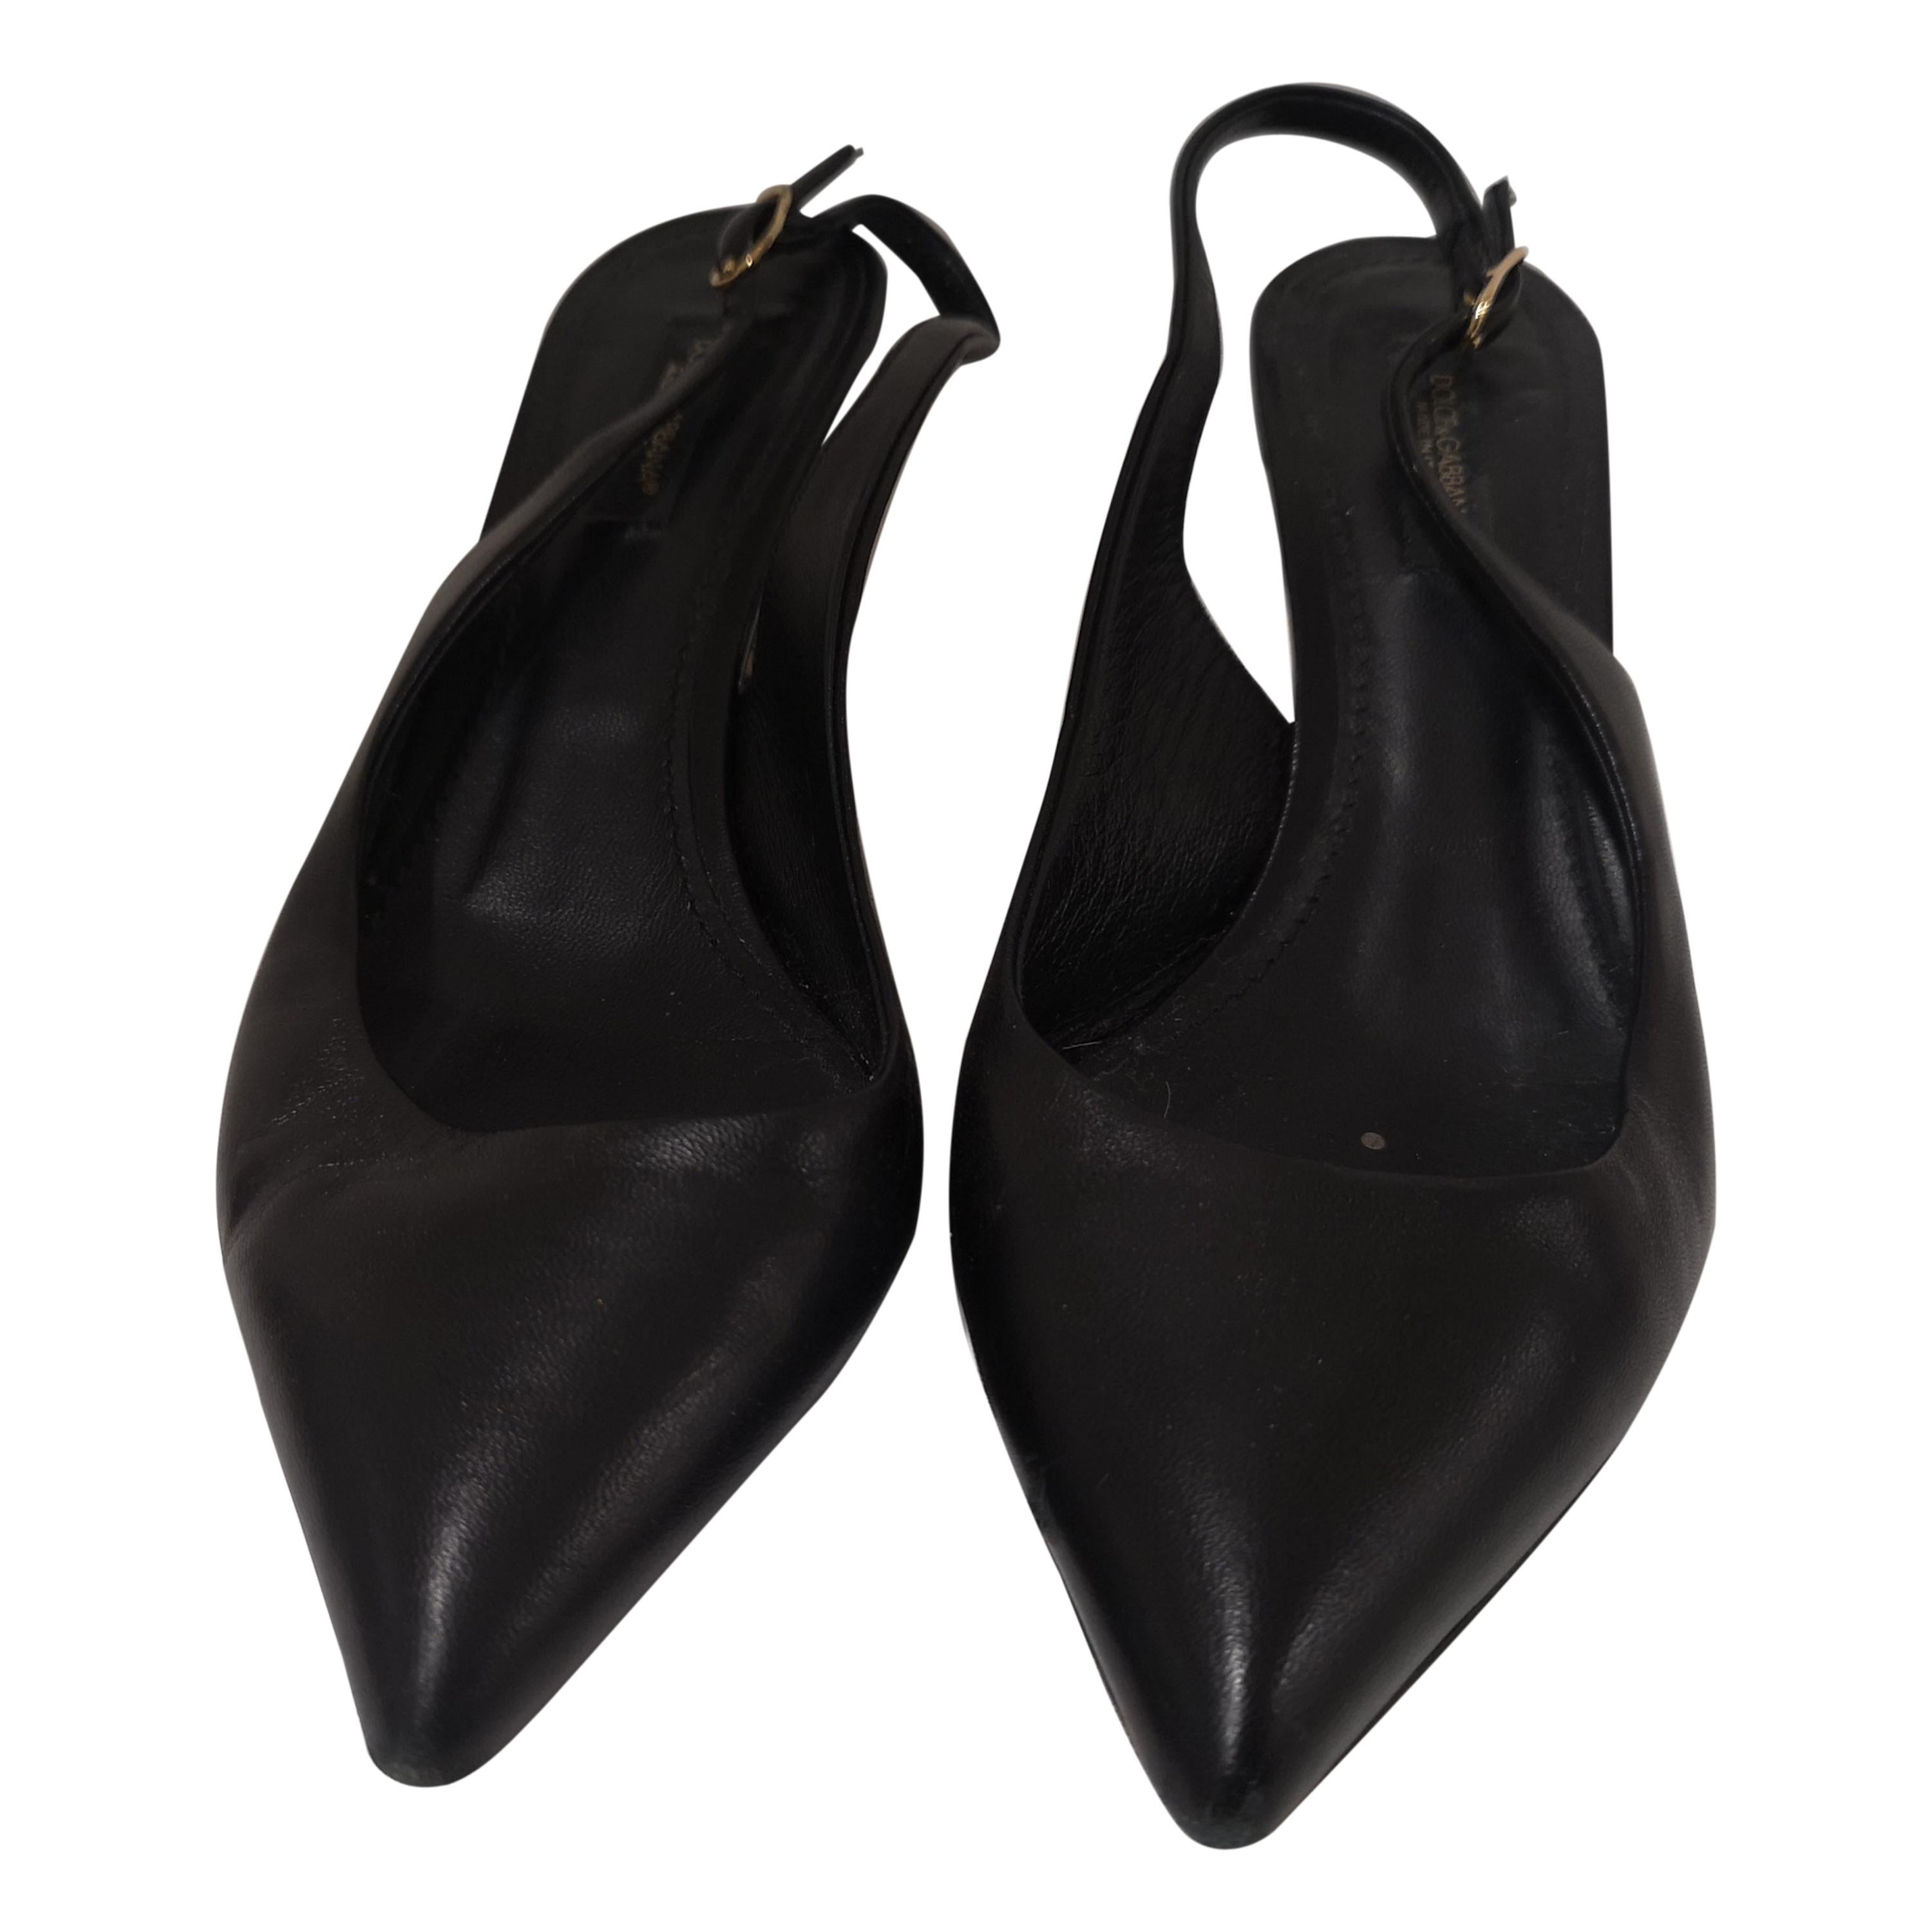 Dolce & Gabbana black leather decollete / shoes